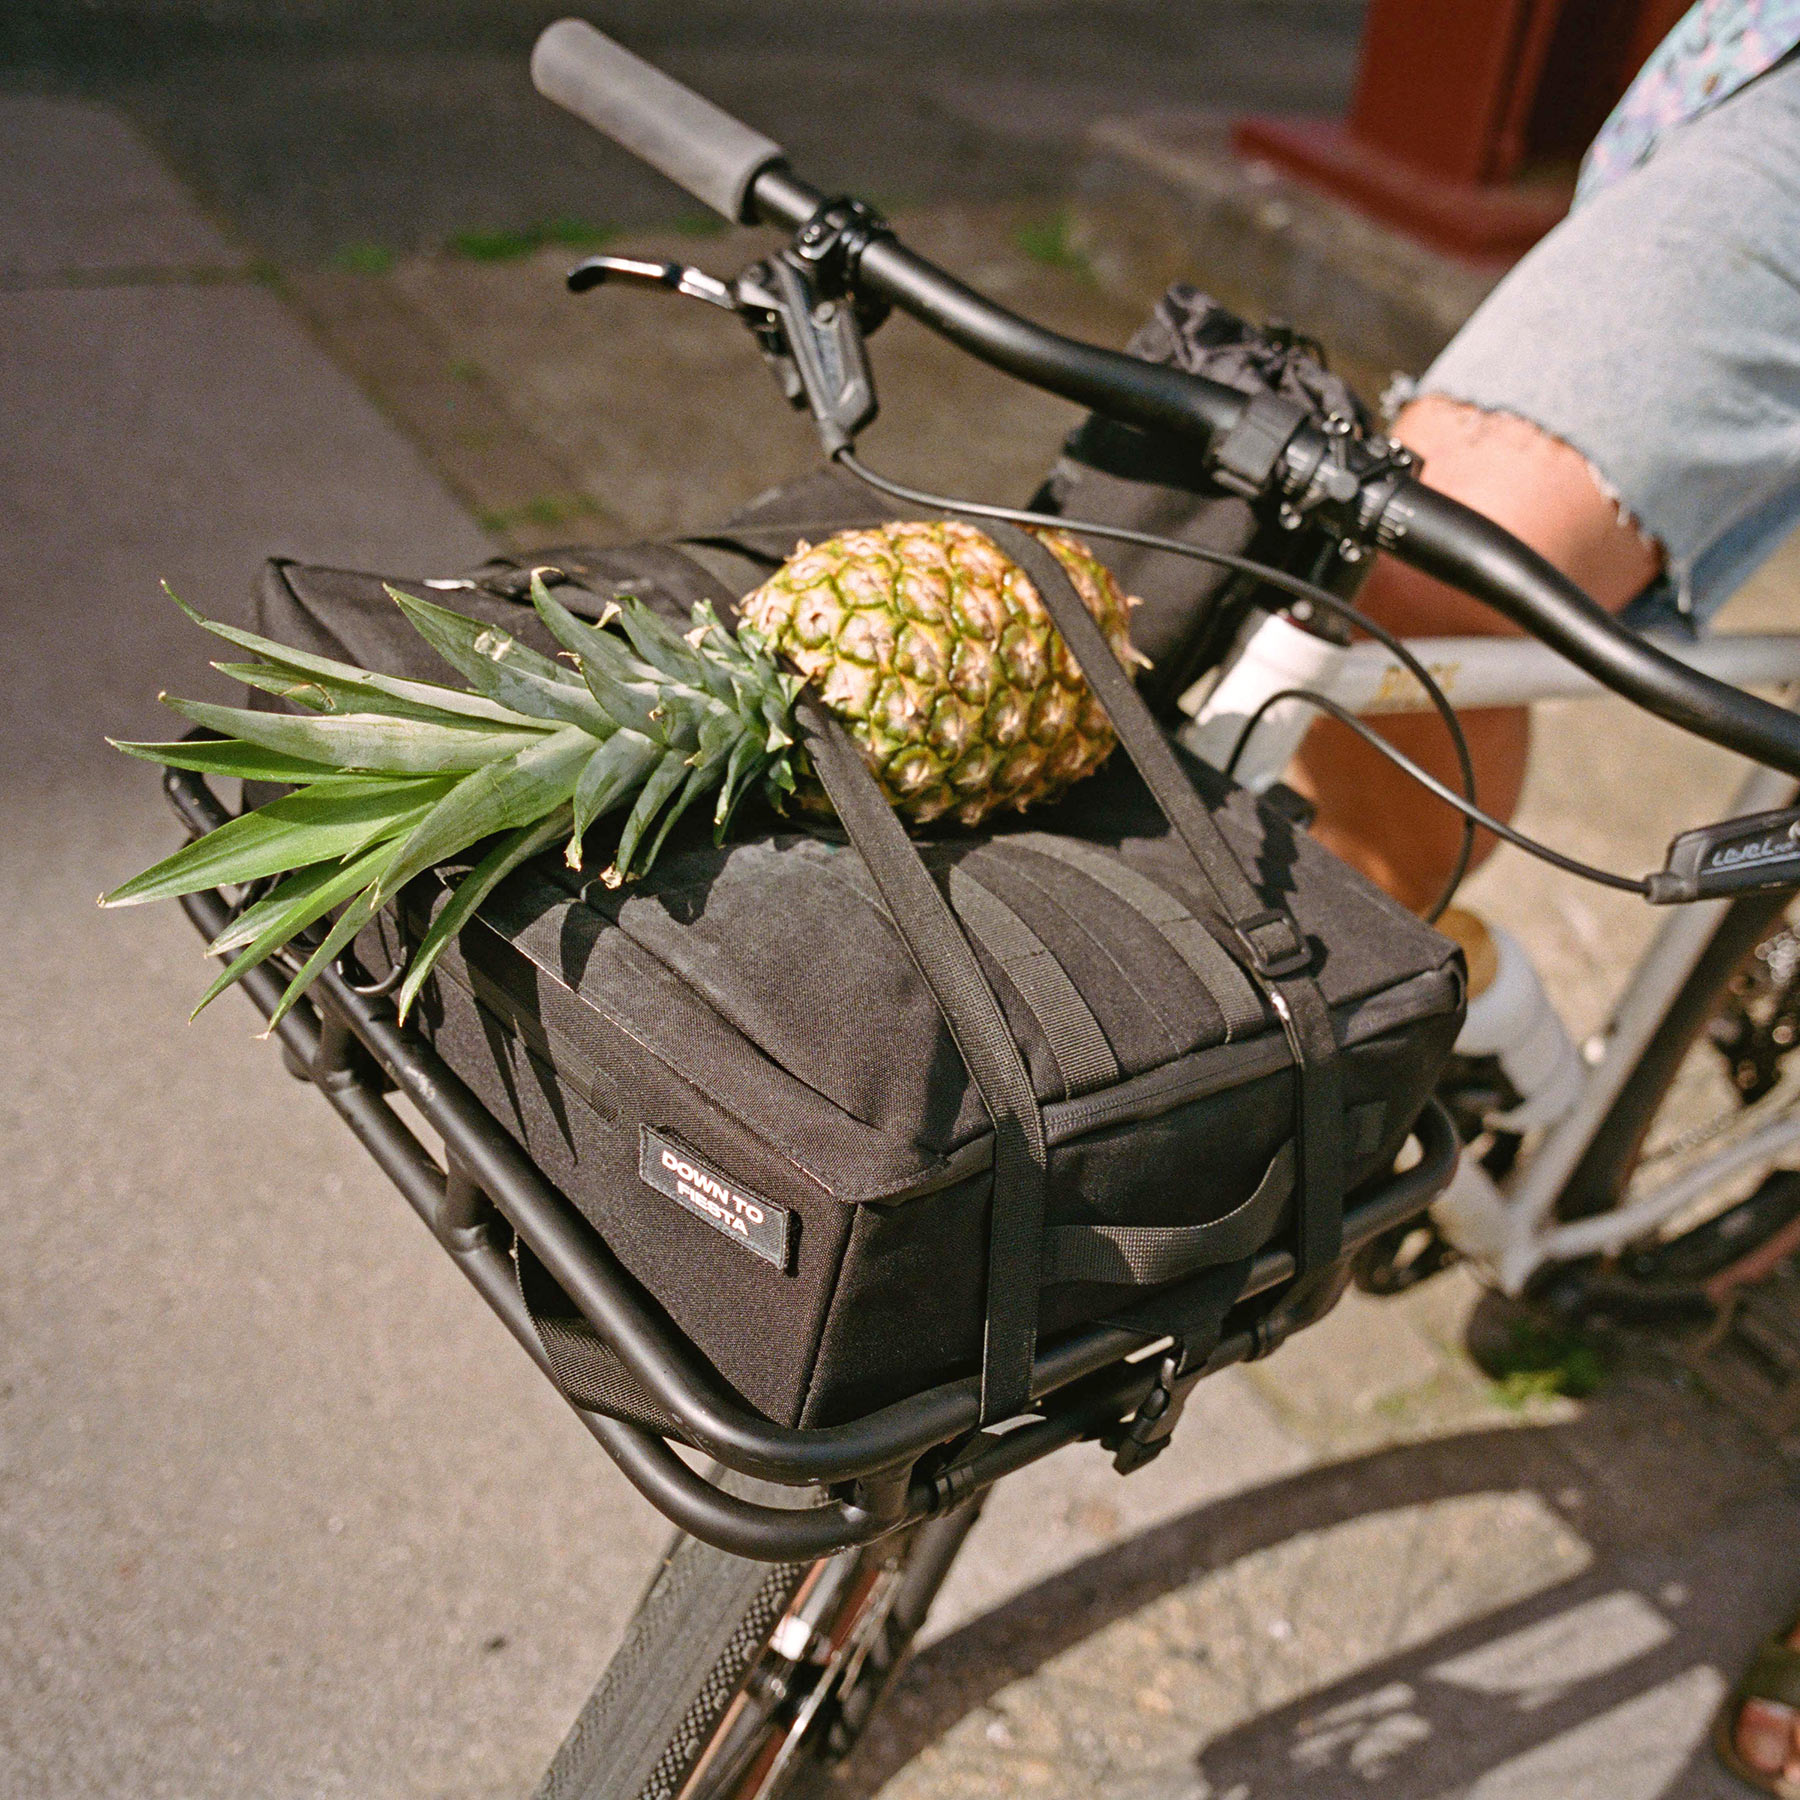 Rose Hobo steel flatbar hybrid urban commuter gravel bike, Hobo Rack Bag with groceries